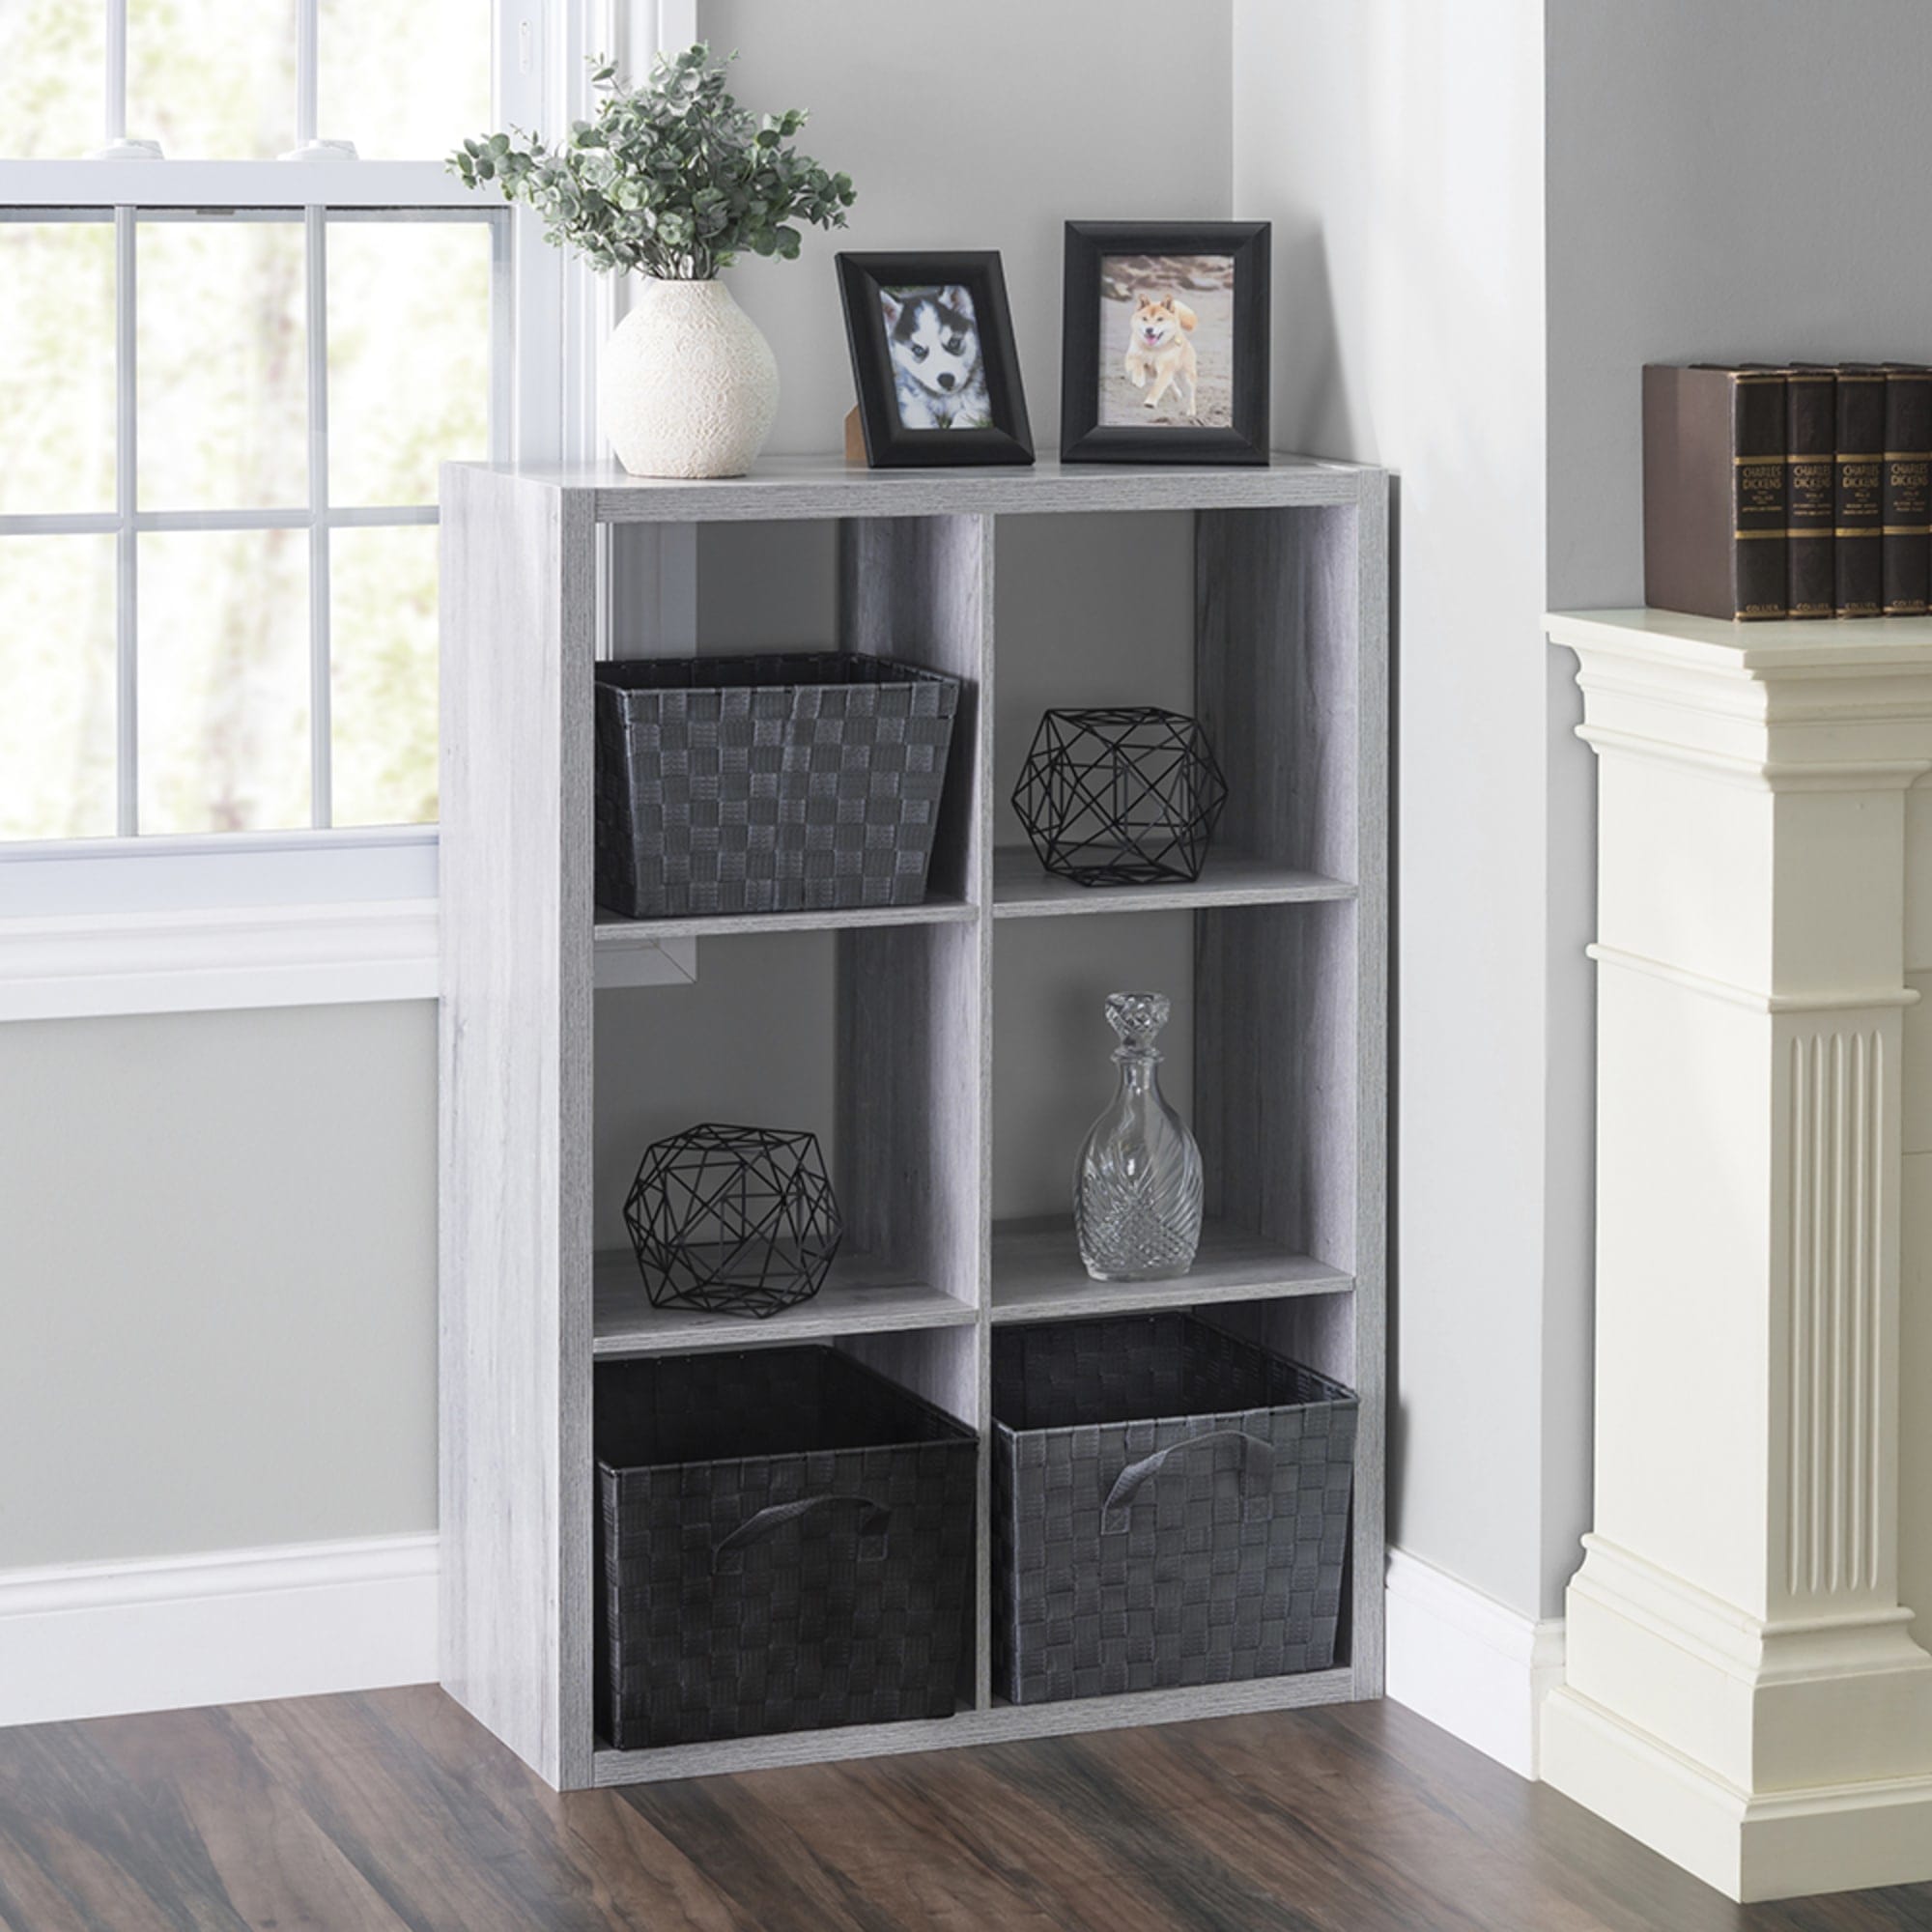 Home Basics 6 Open Cube Organizing Wood Storage Shelf, Grey $100.00 EACH, CASE PACK OF 1